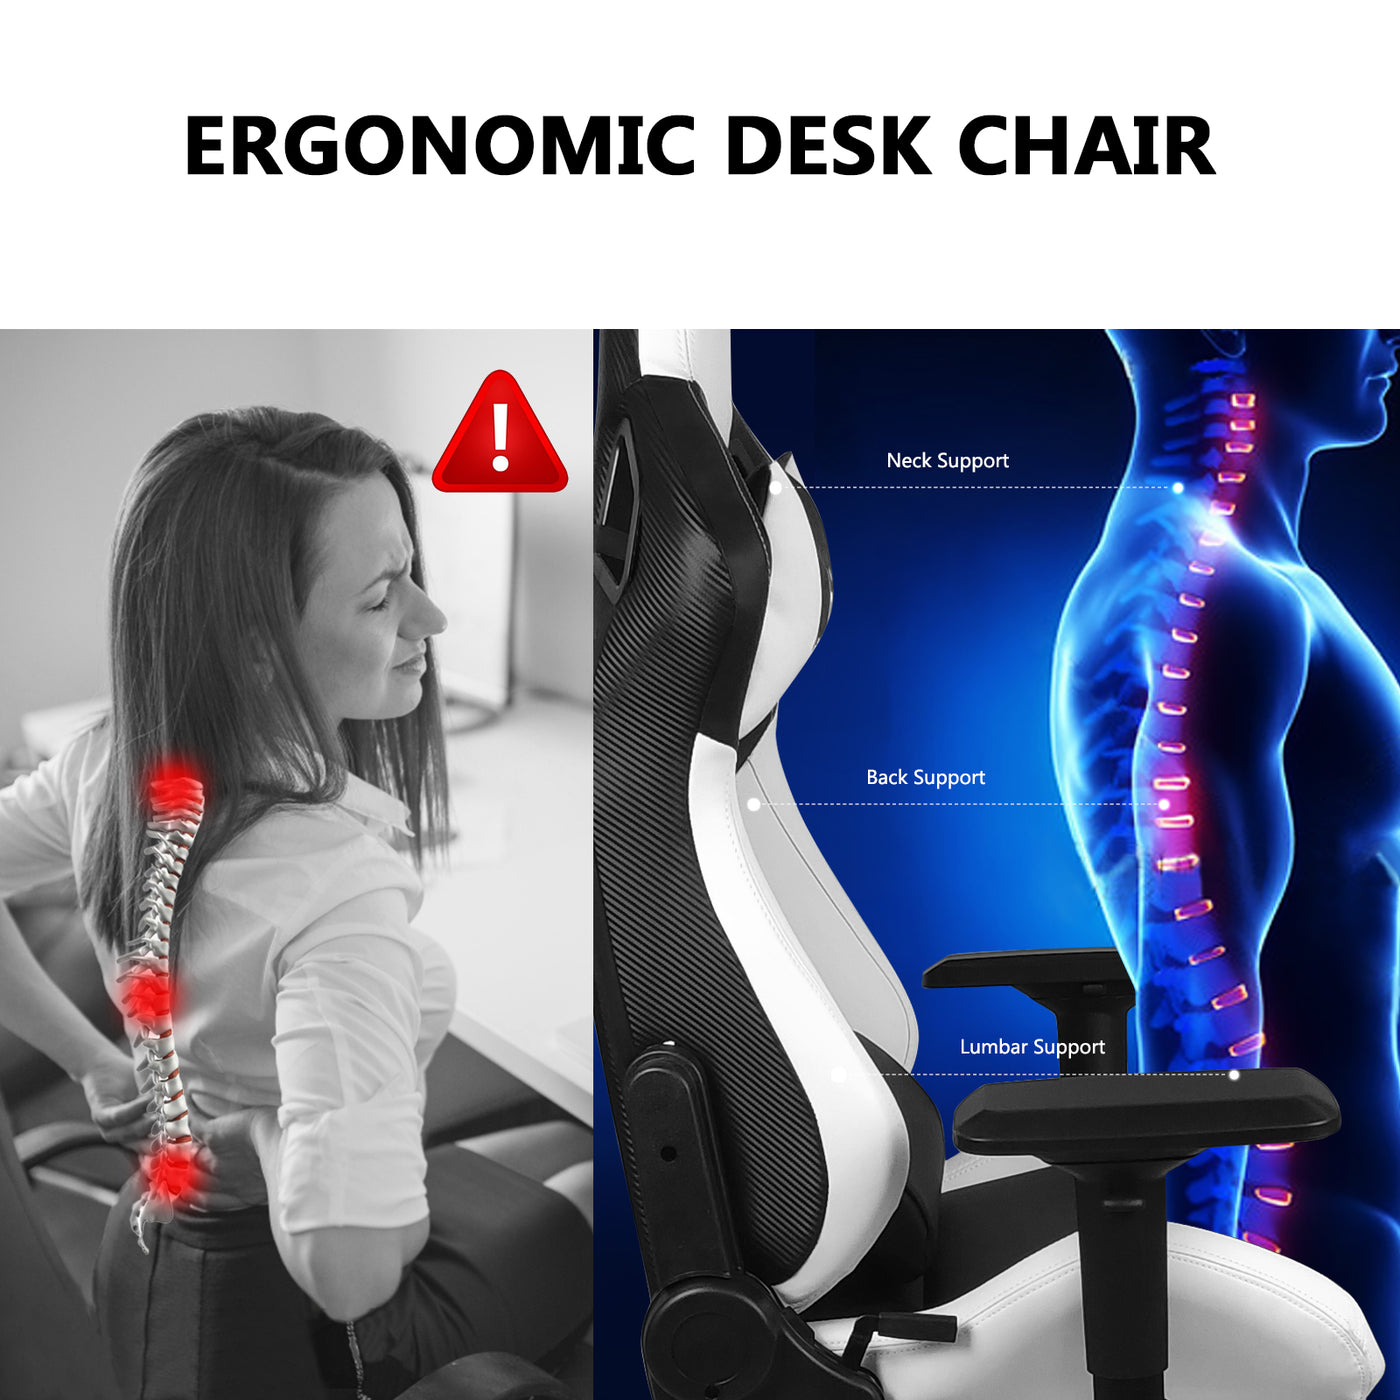 Ergonomic High-Back Swivel Racing Style Office Gamer Desk Computer Gaming Chair